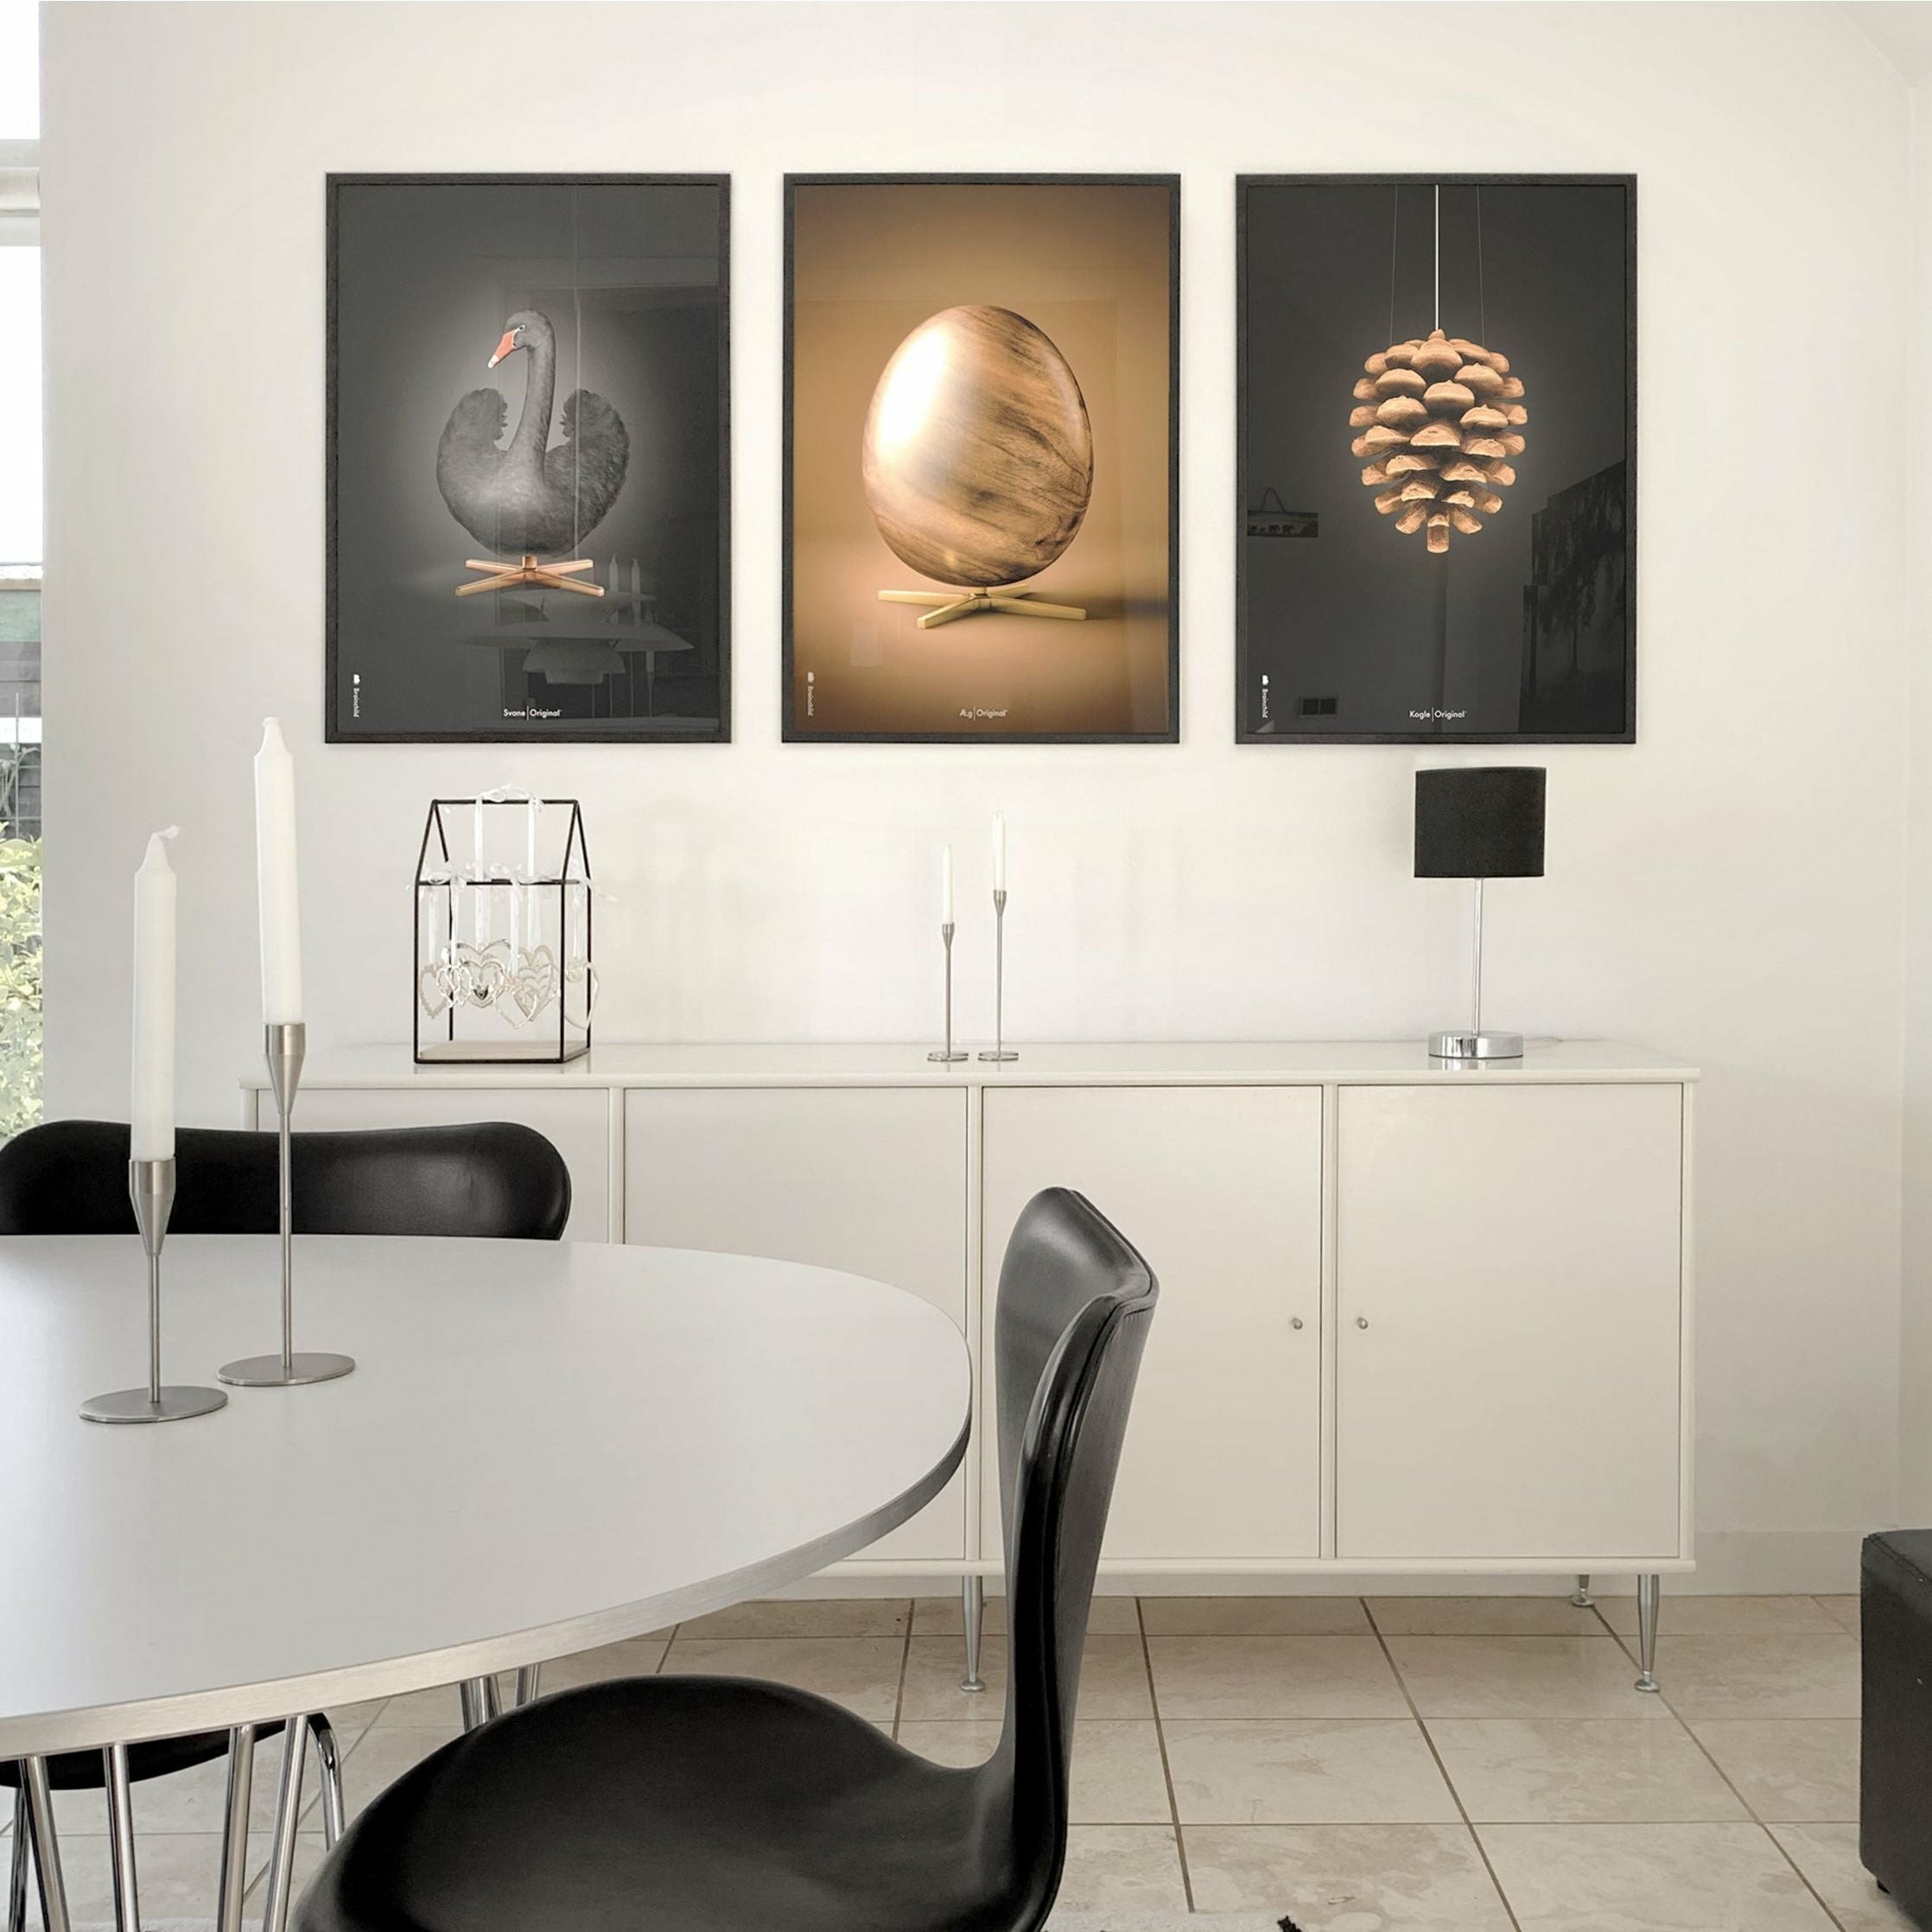 Brainchild Swan Classic Poster Without Frame 50 X70 Cm, Black/Black Background